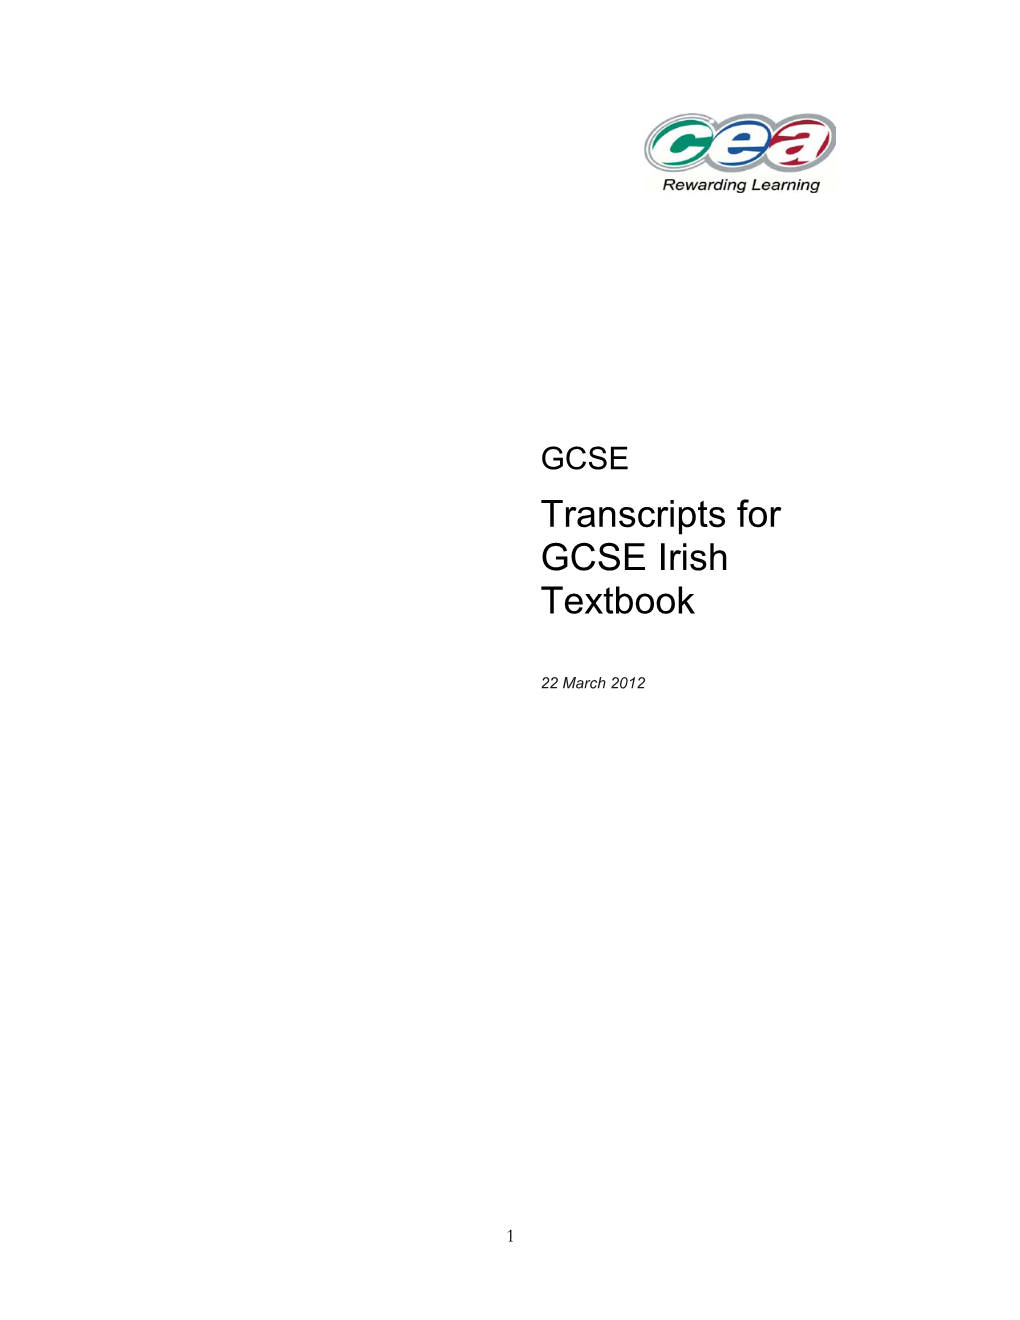 Transcripts for GCSE Irish Textbook